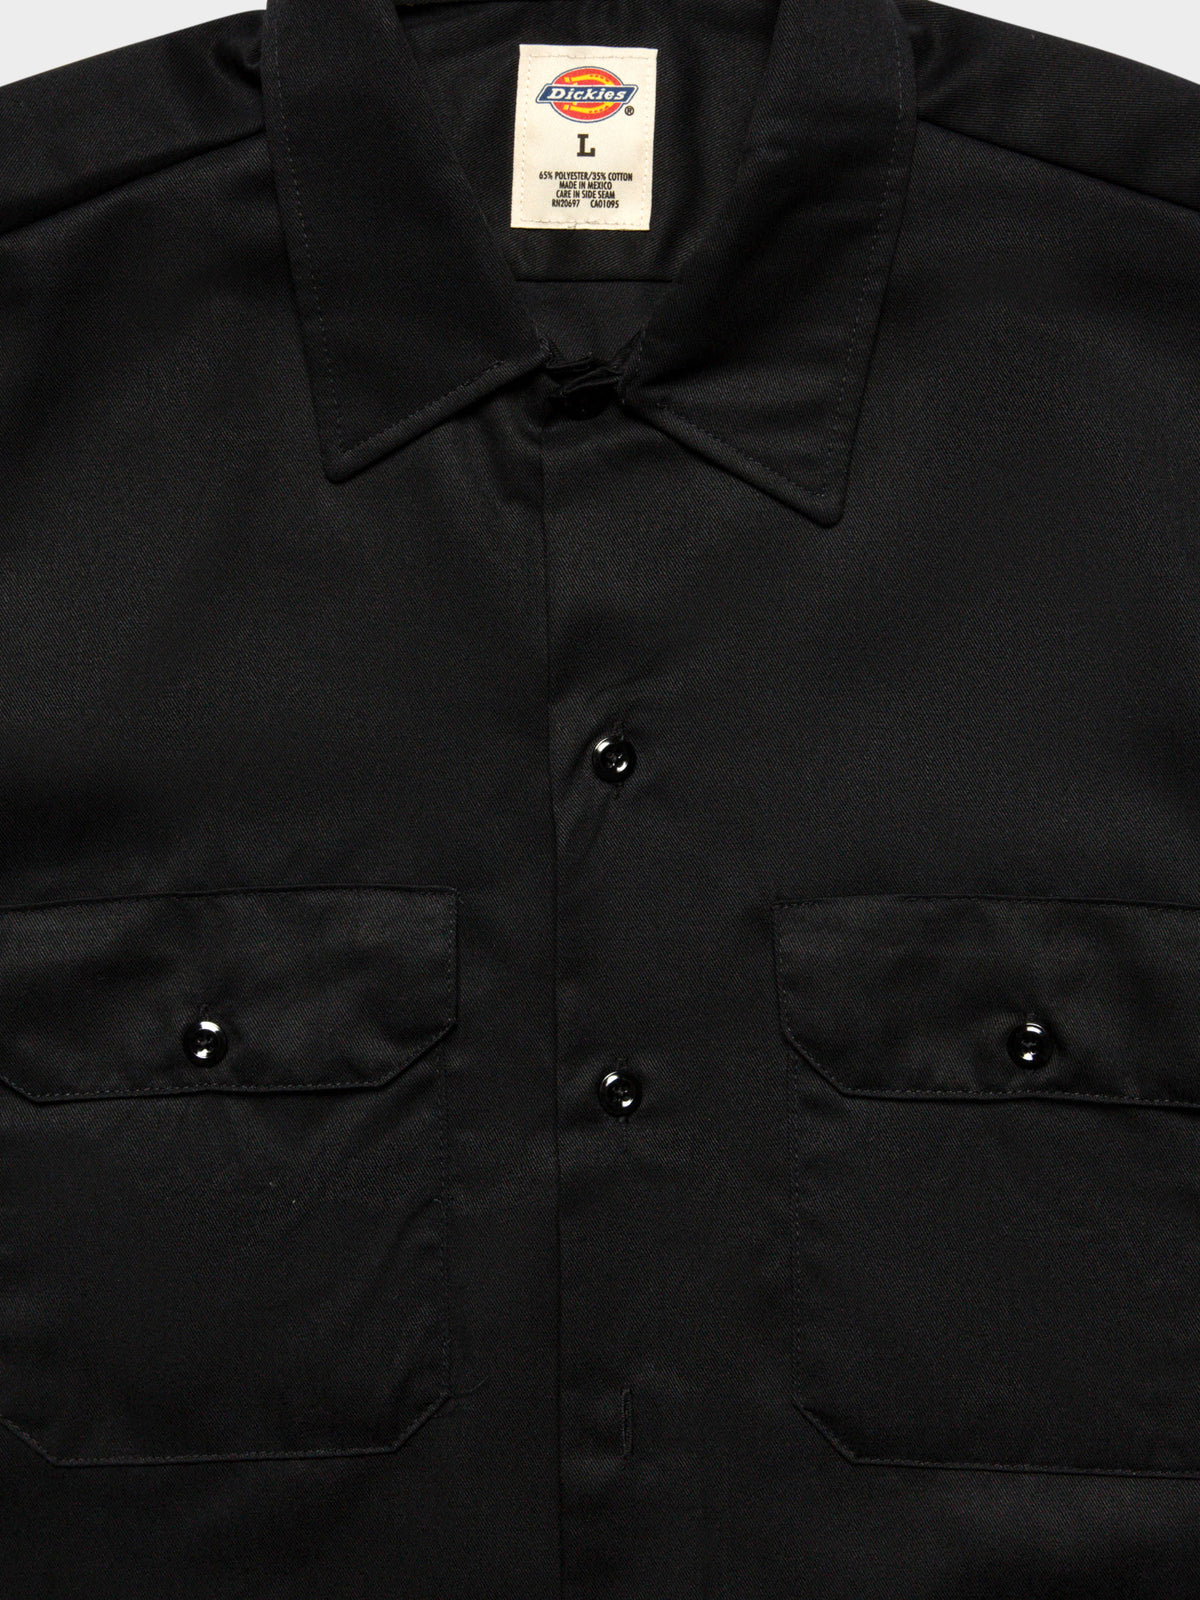 Short Sleeve Work Shirt in Black